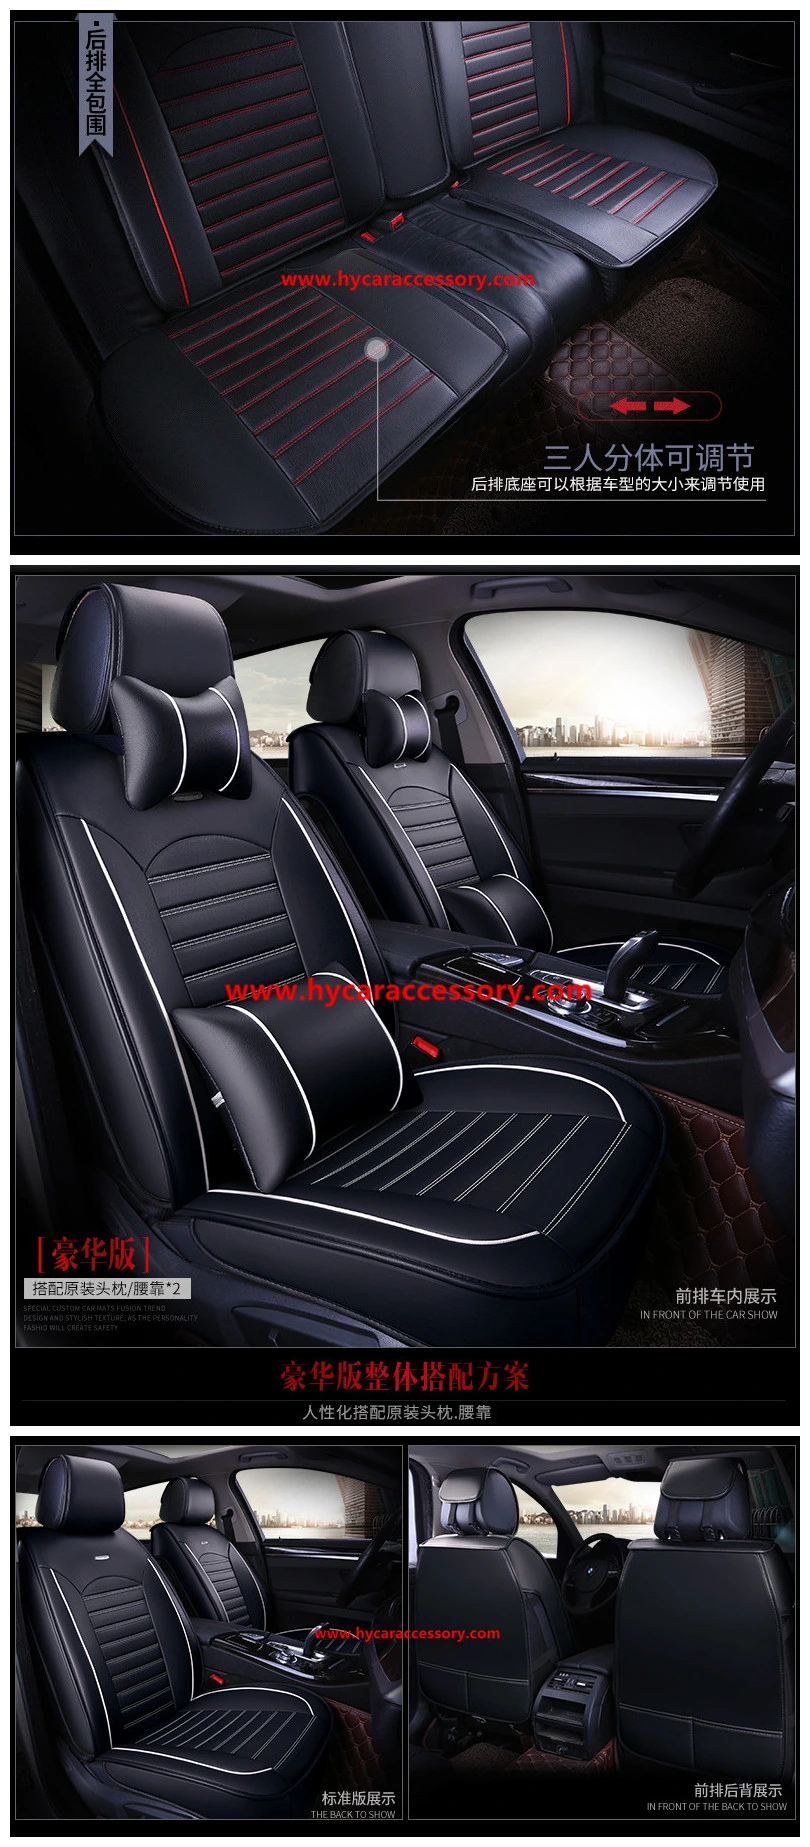 Car Accessories Car Decoration Cushion Universal Black Pure Leather Auto Car Seat Cover